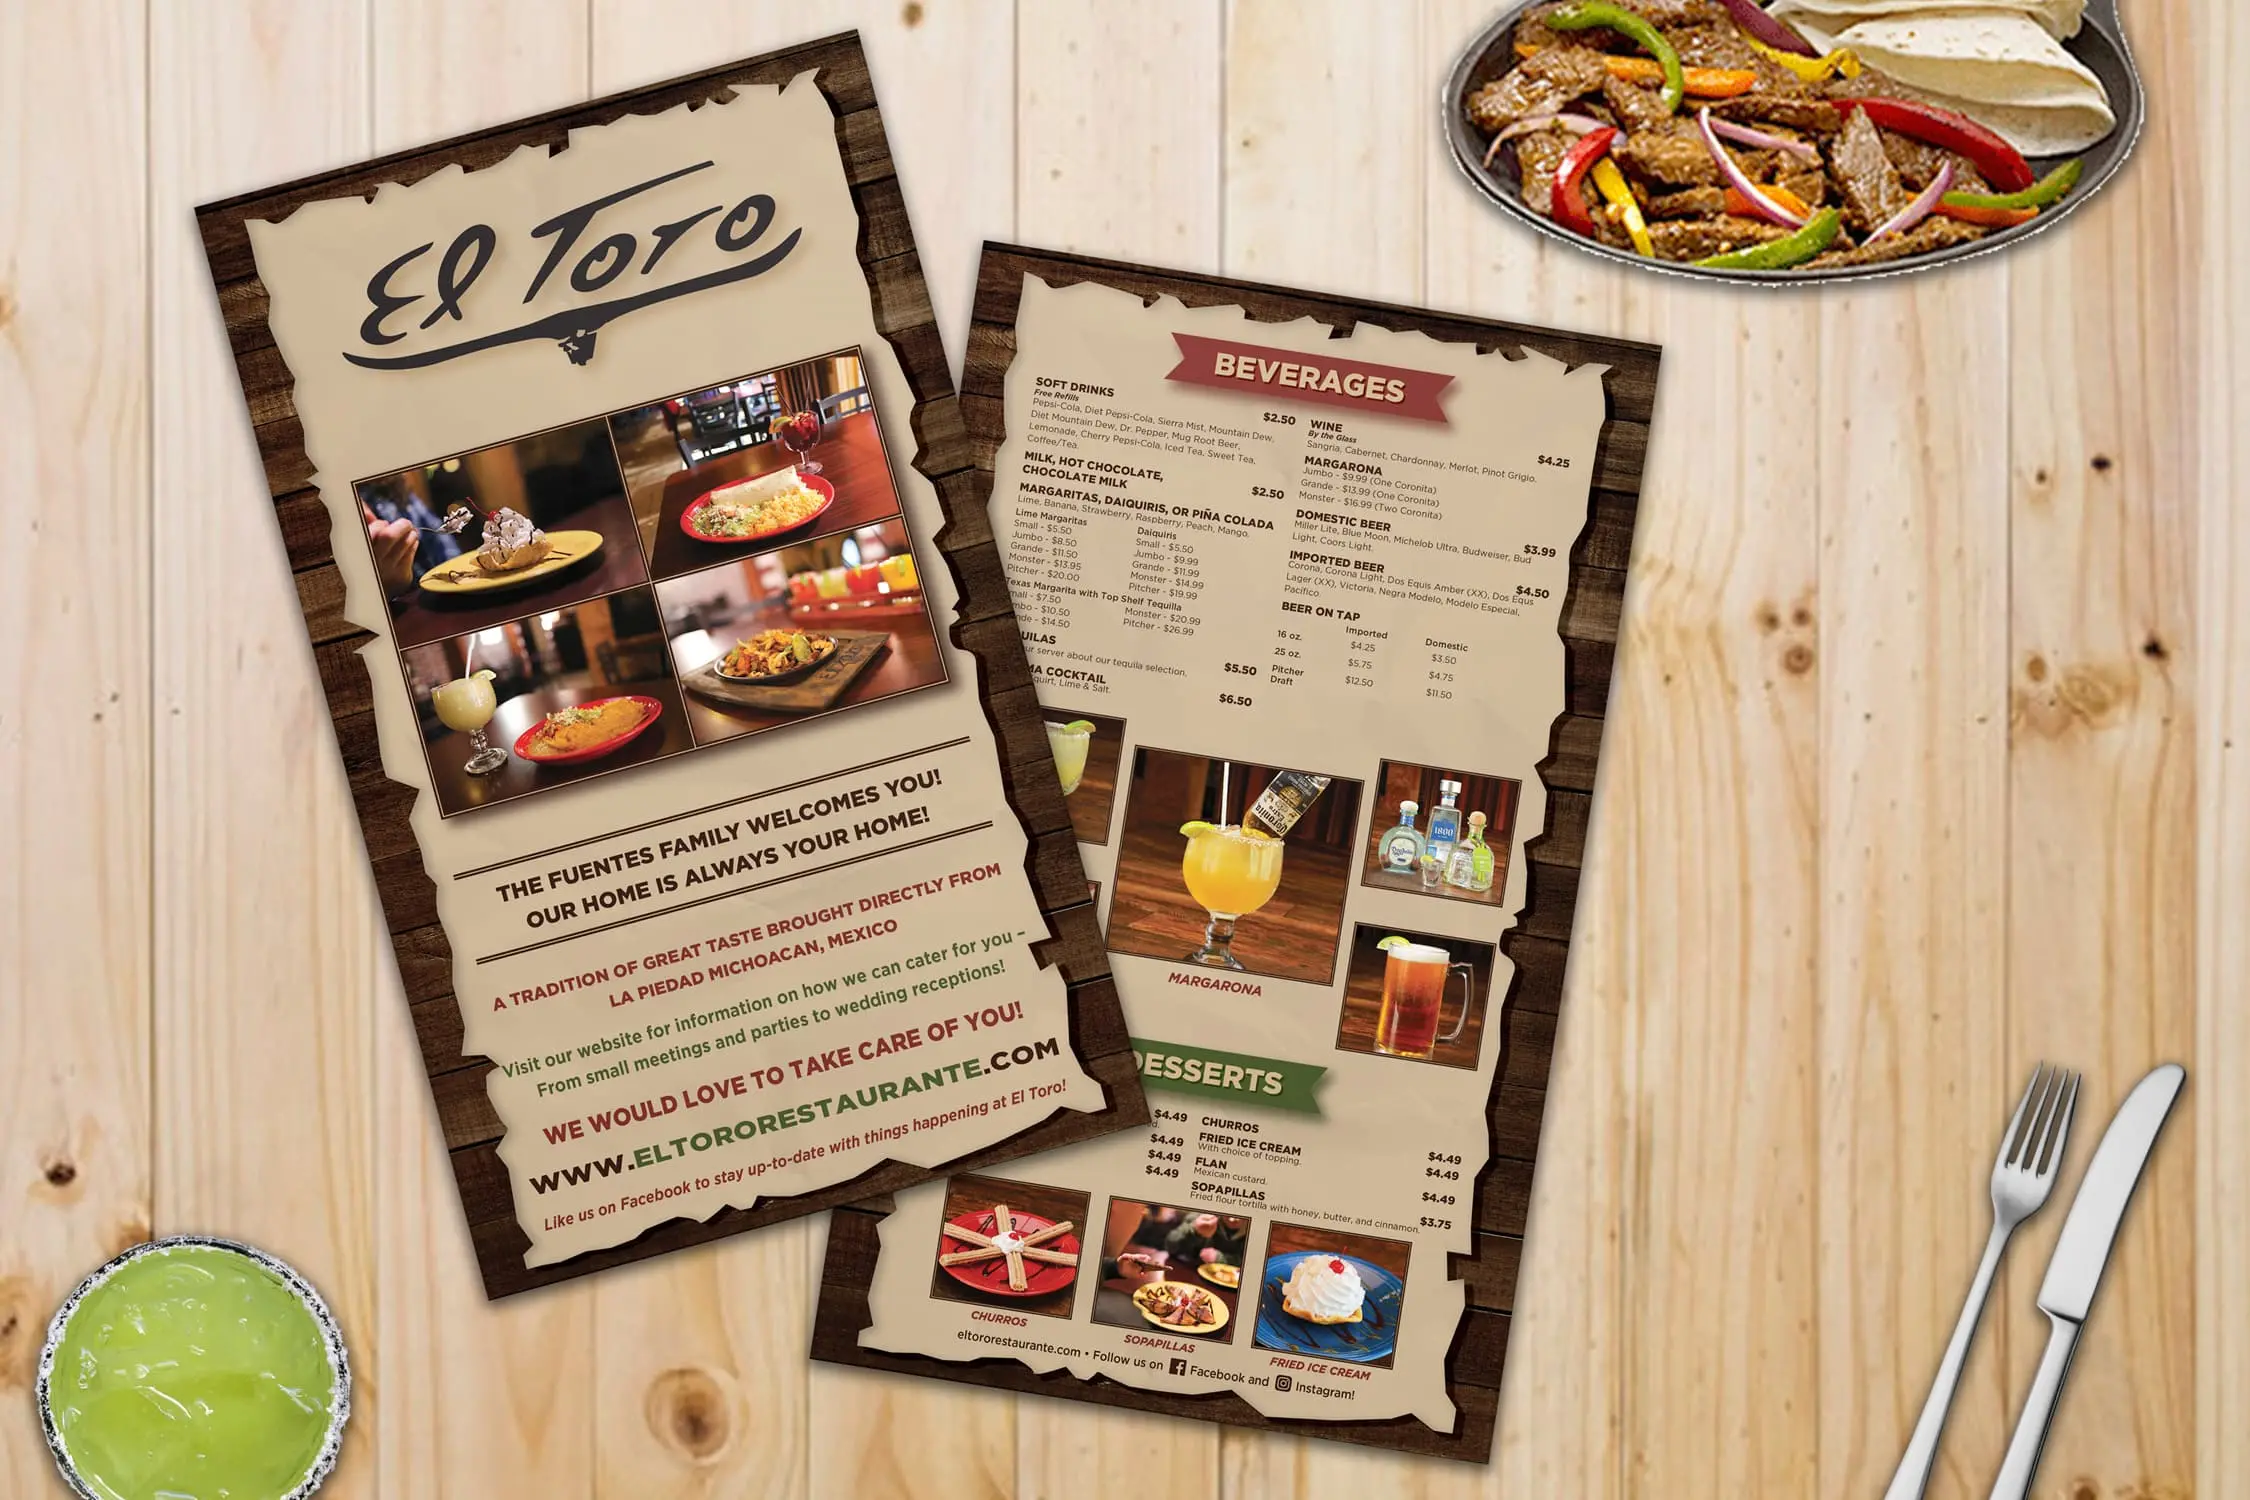 el toro menus with a margarita, fajitas, and silverware on a table